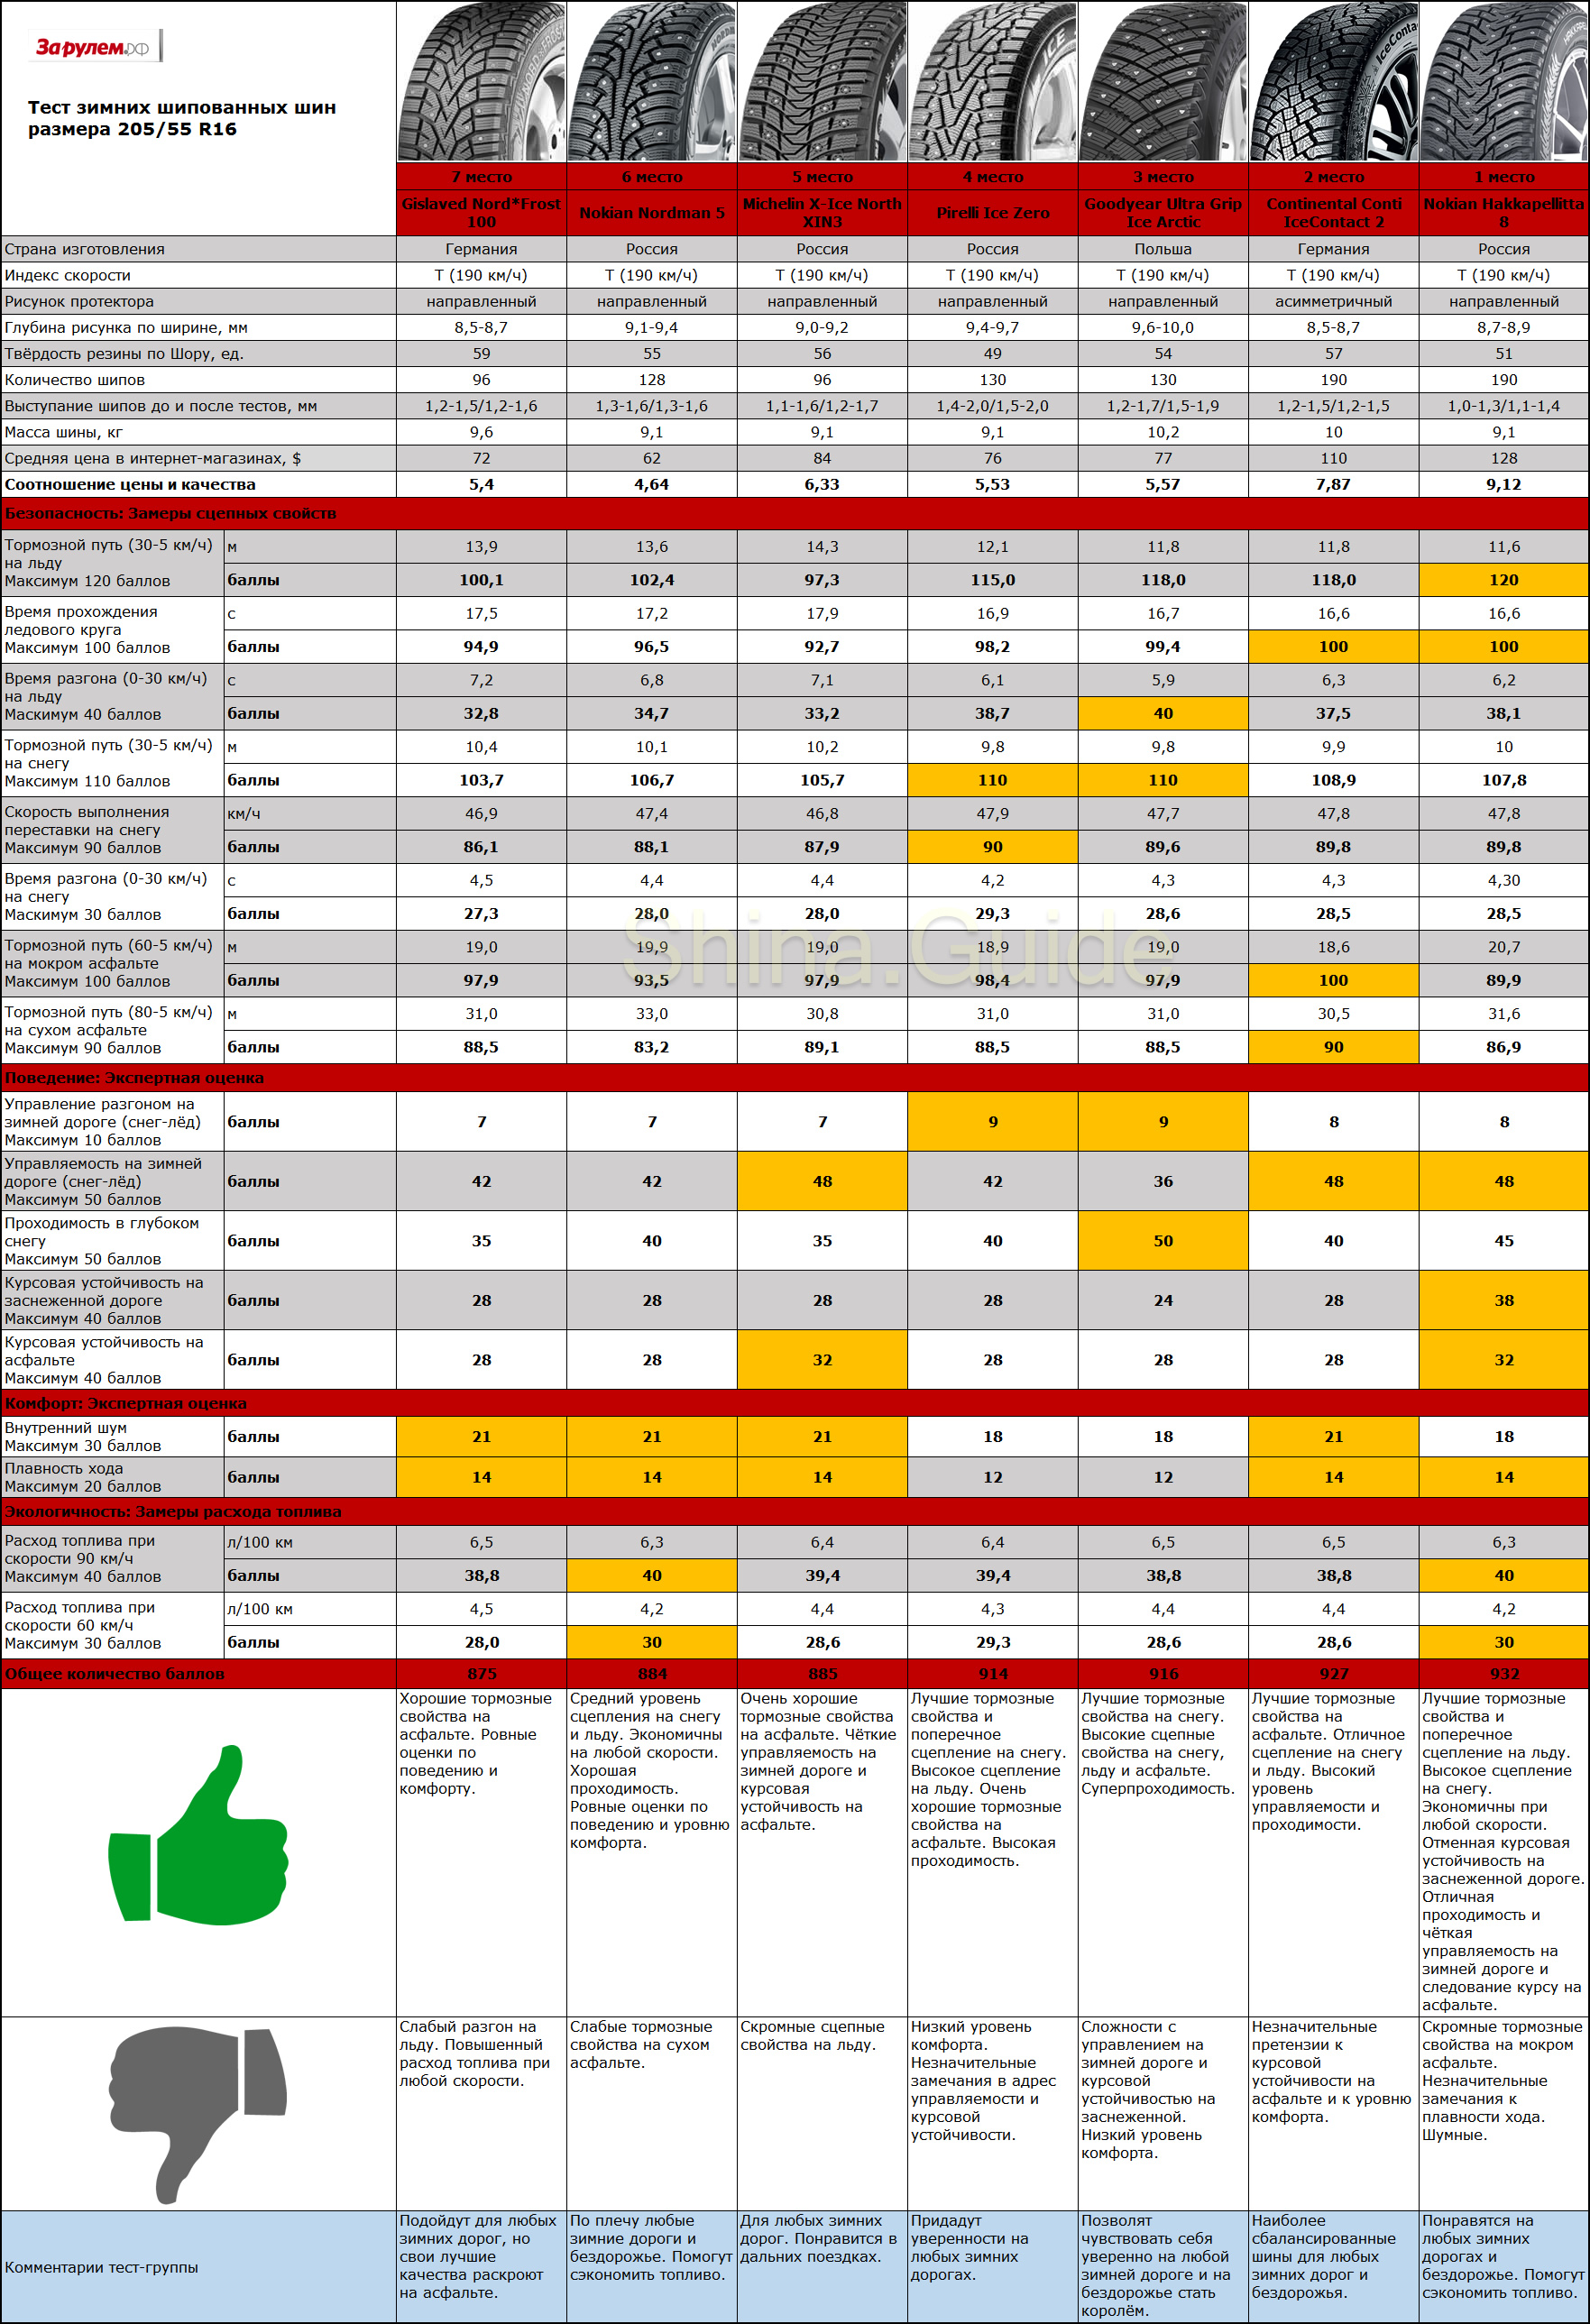 Результаты теста зимних шипованных шин размера 205/55 R16 (За рулём, 2015)